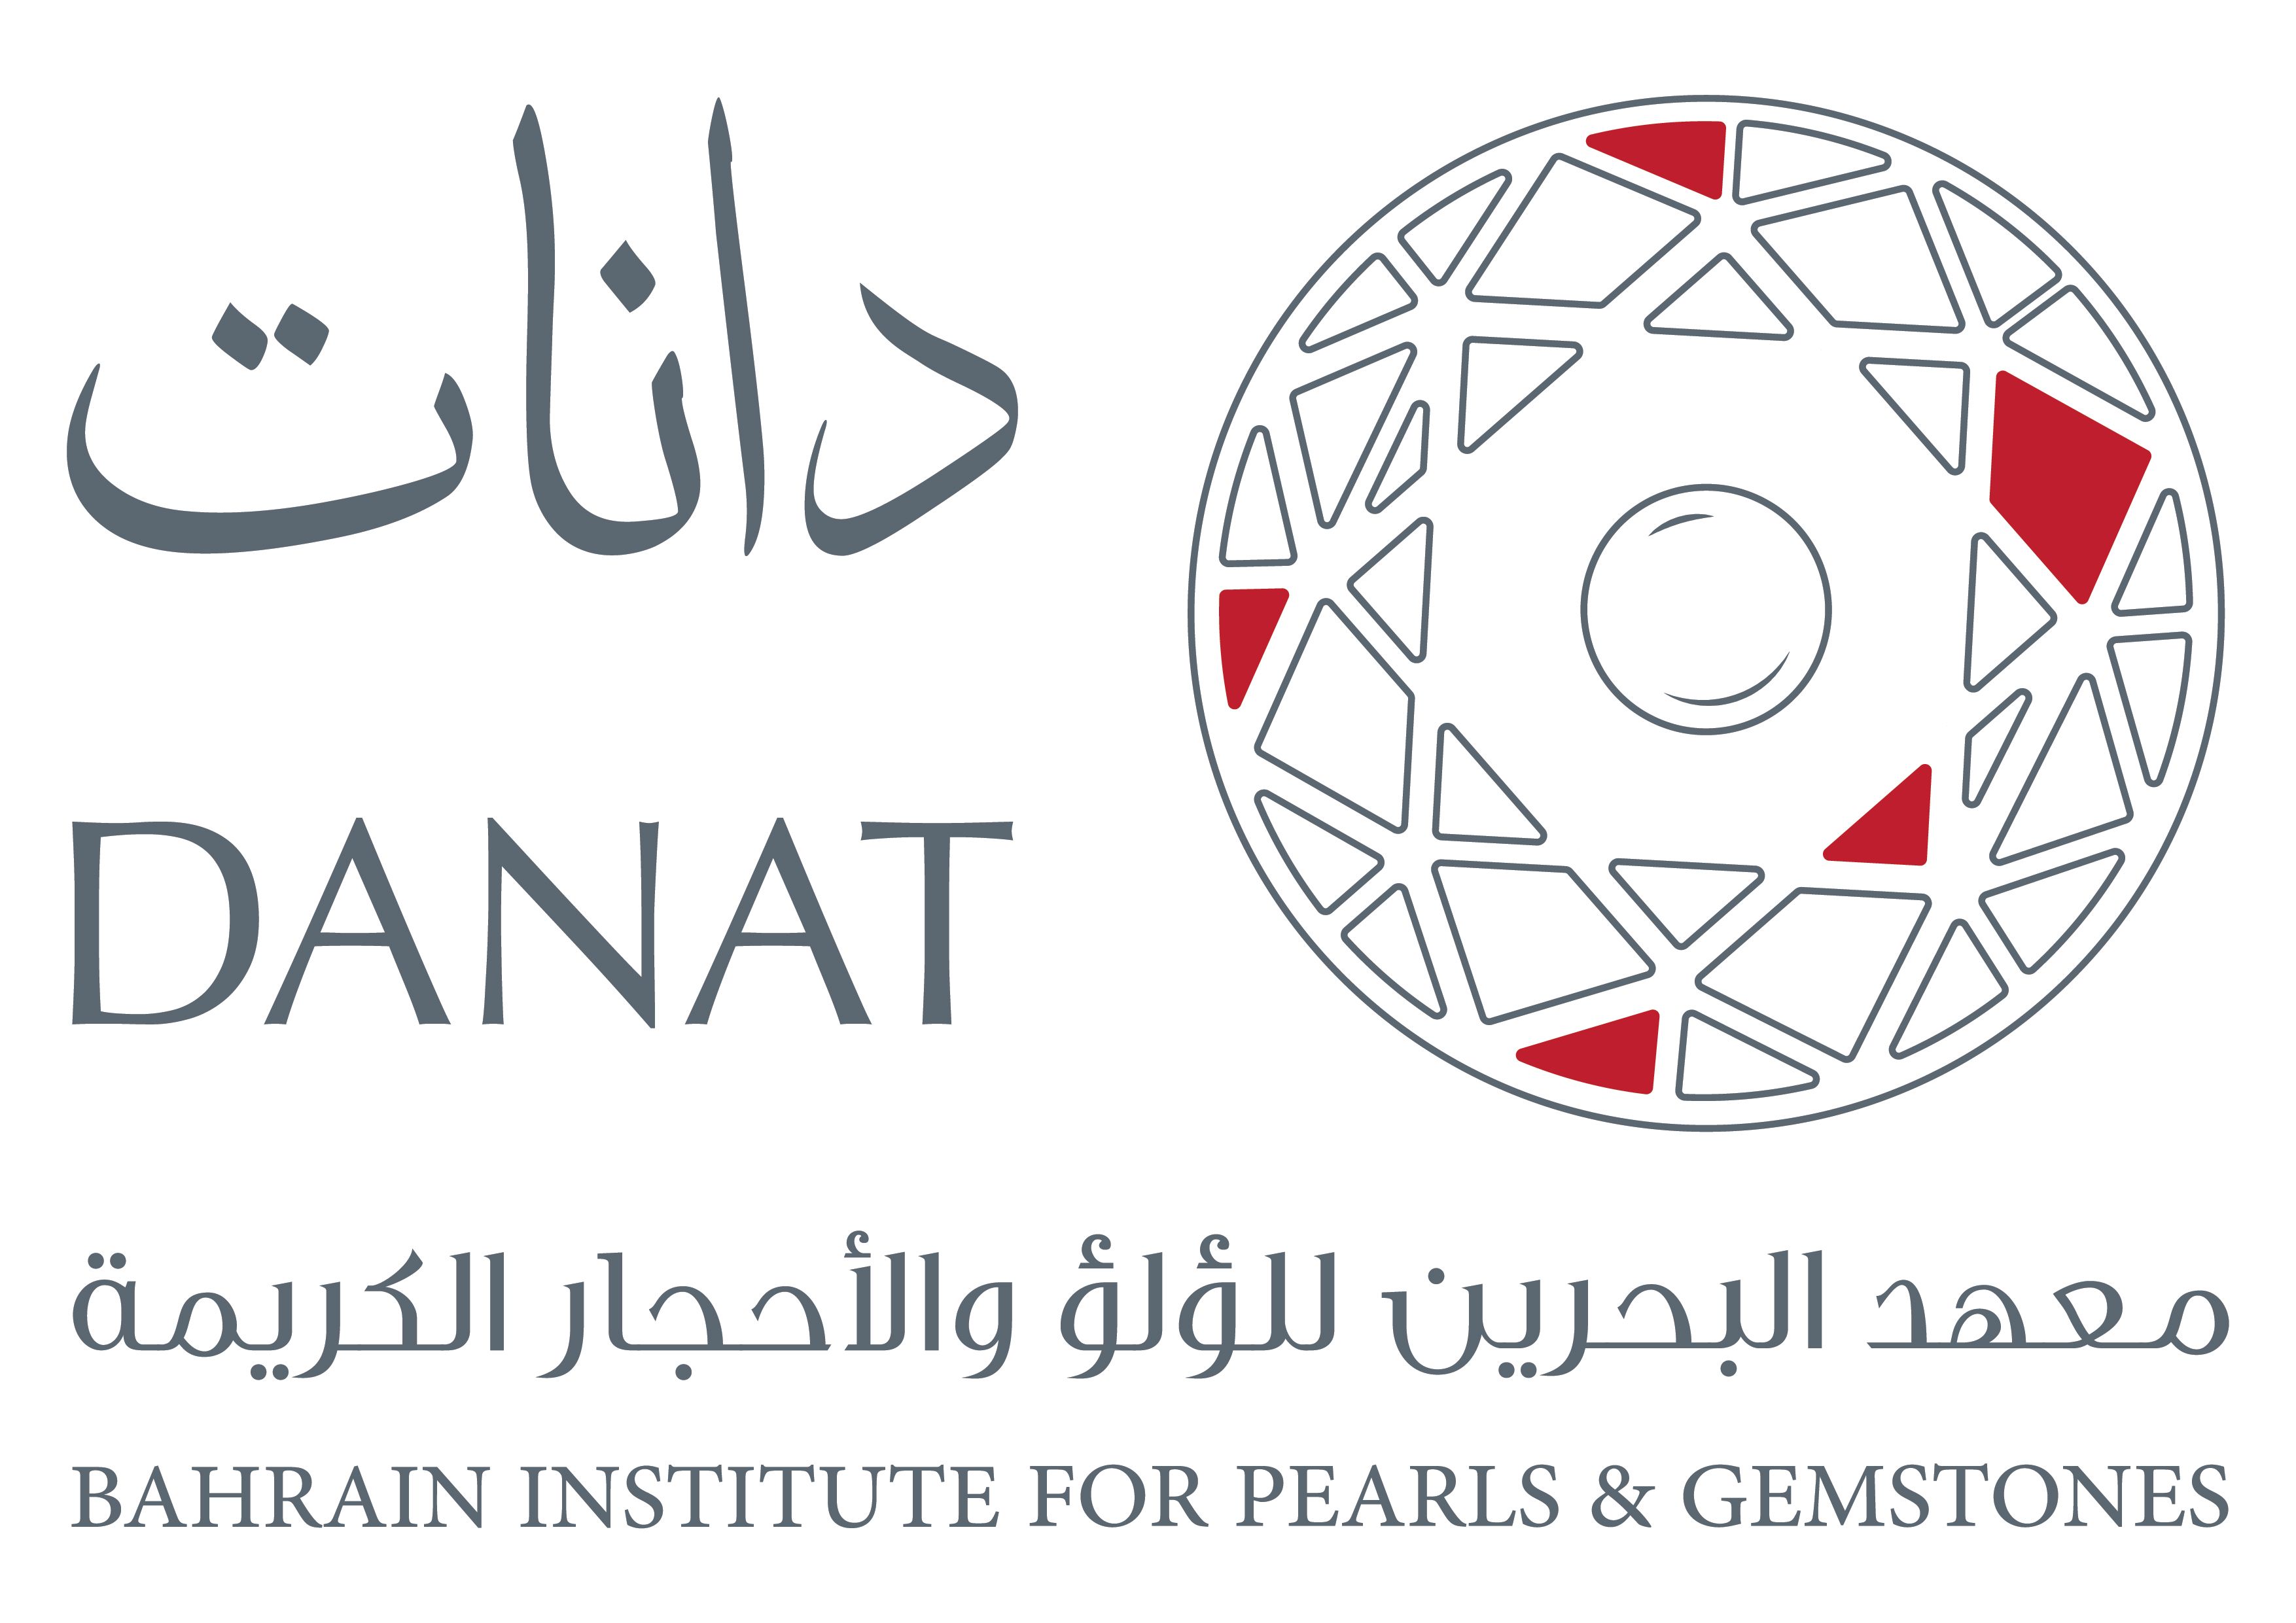 Bahrain Inst. for Pearls & Gemstones (Danat)